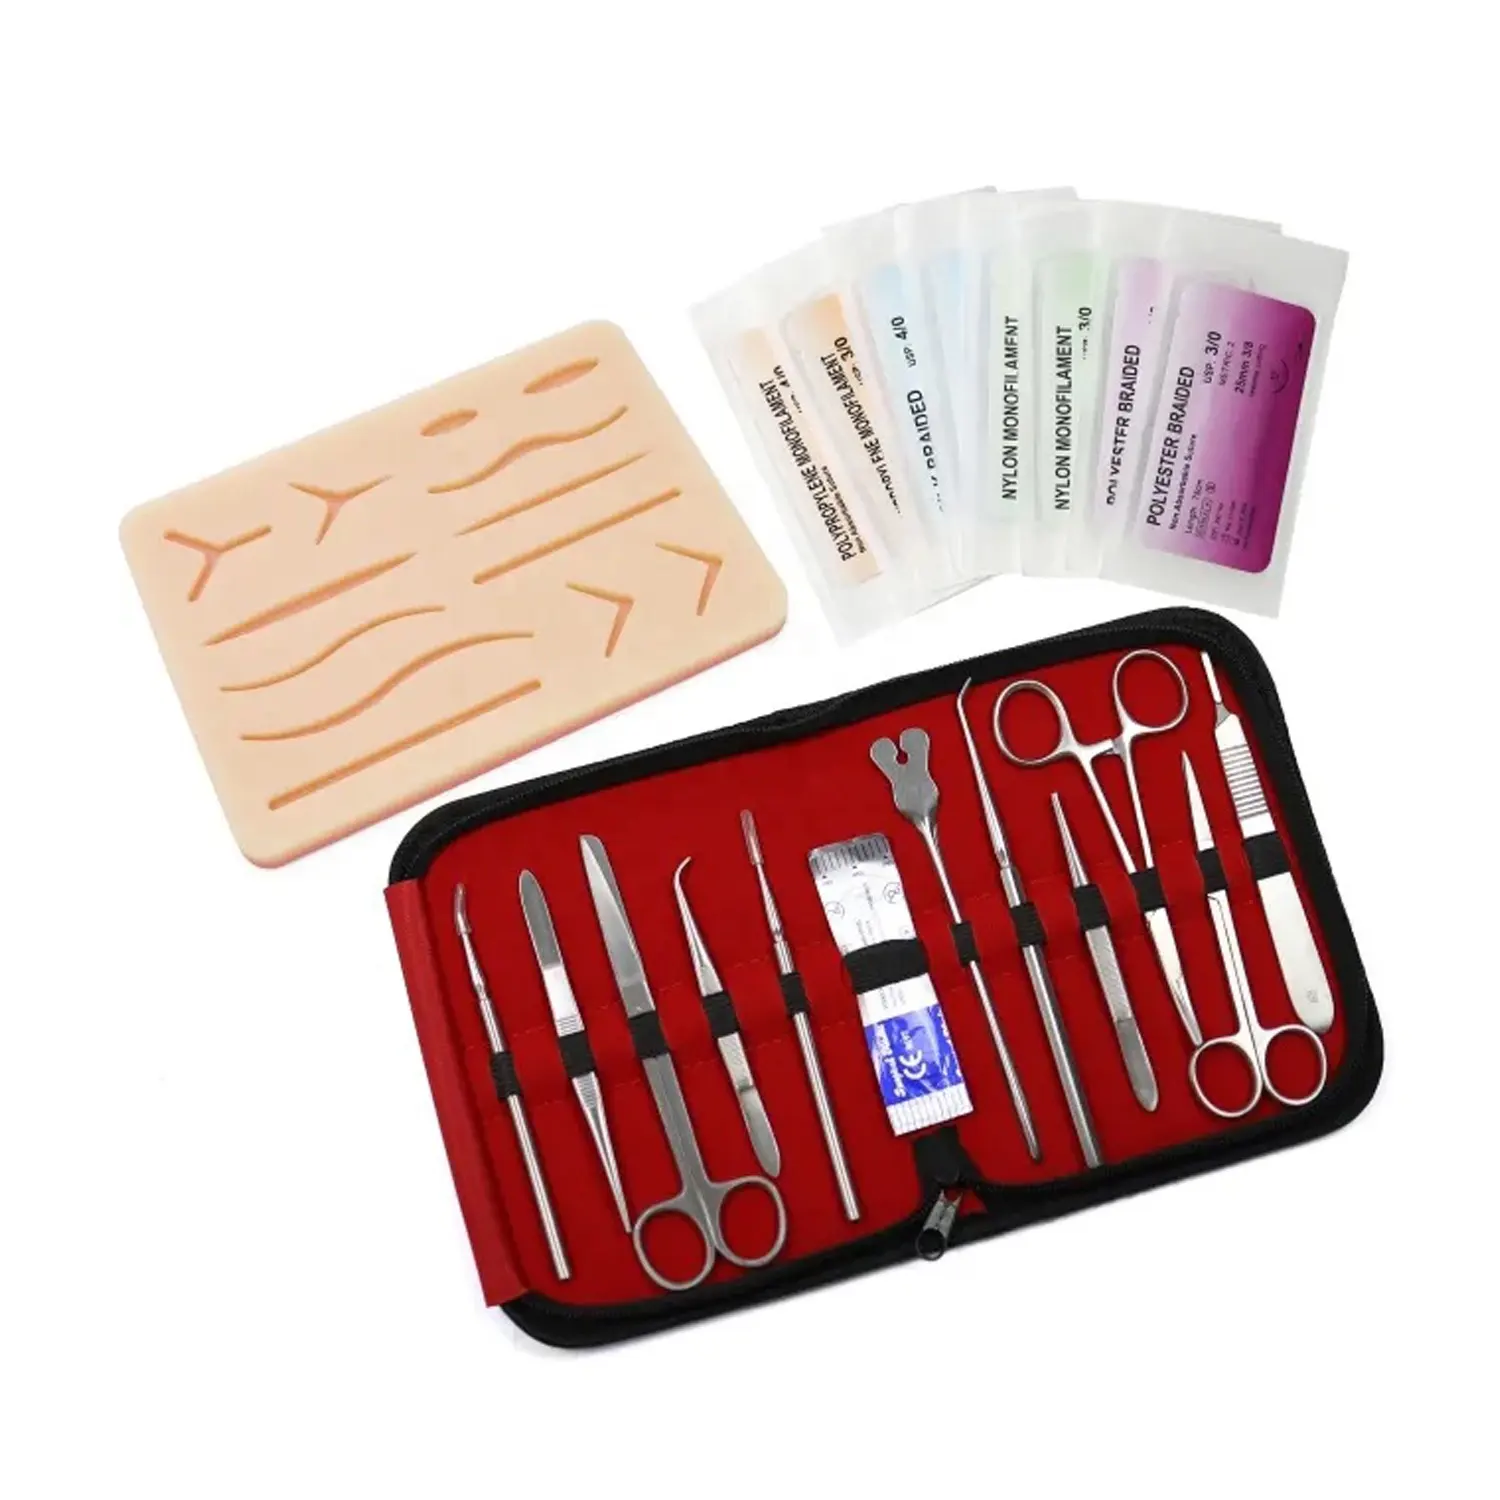 Surgical Suture Kit Basic First Aid Medical Travel Kit